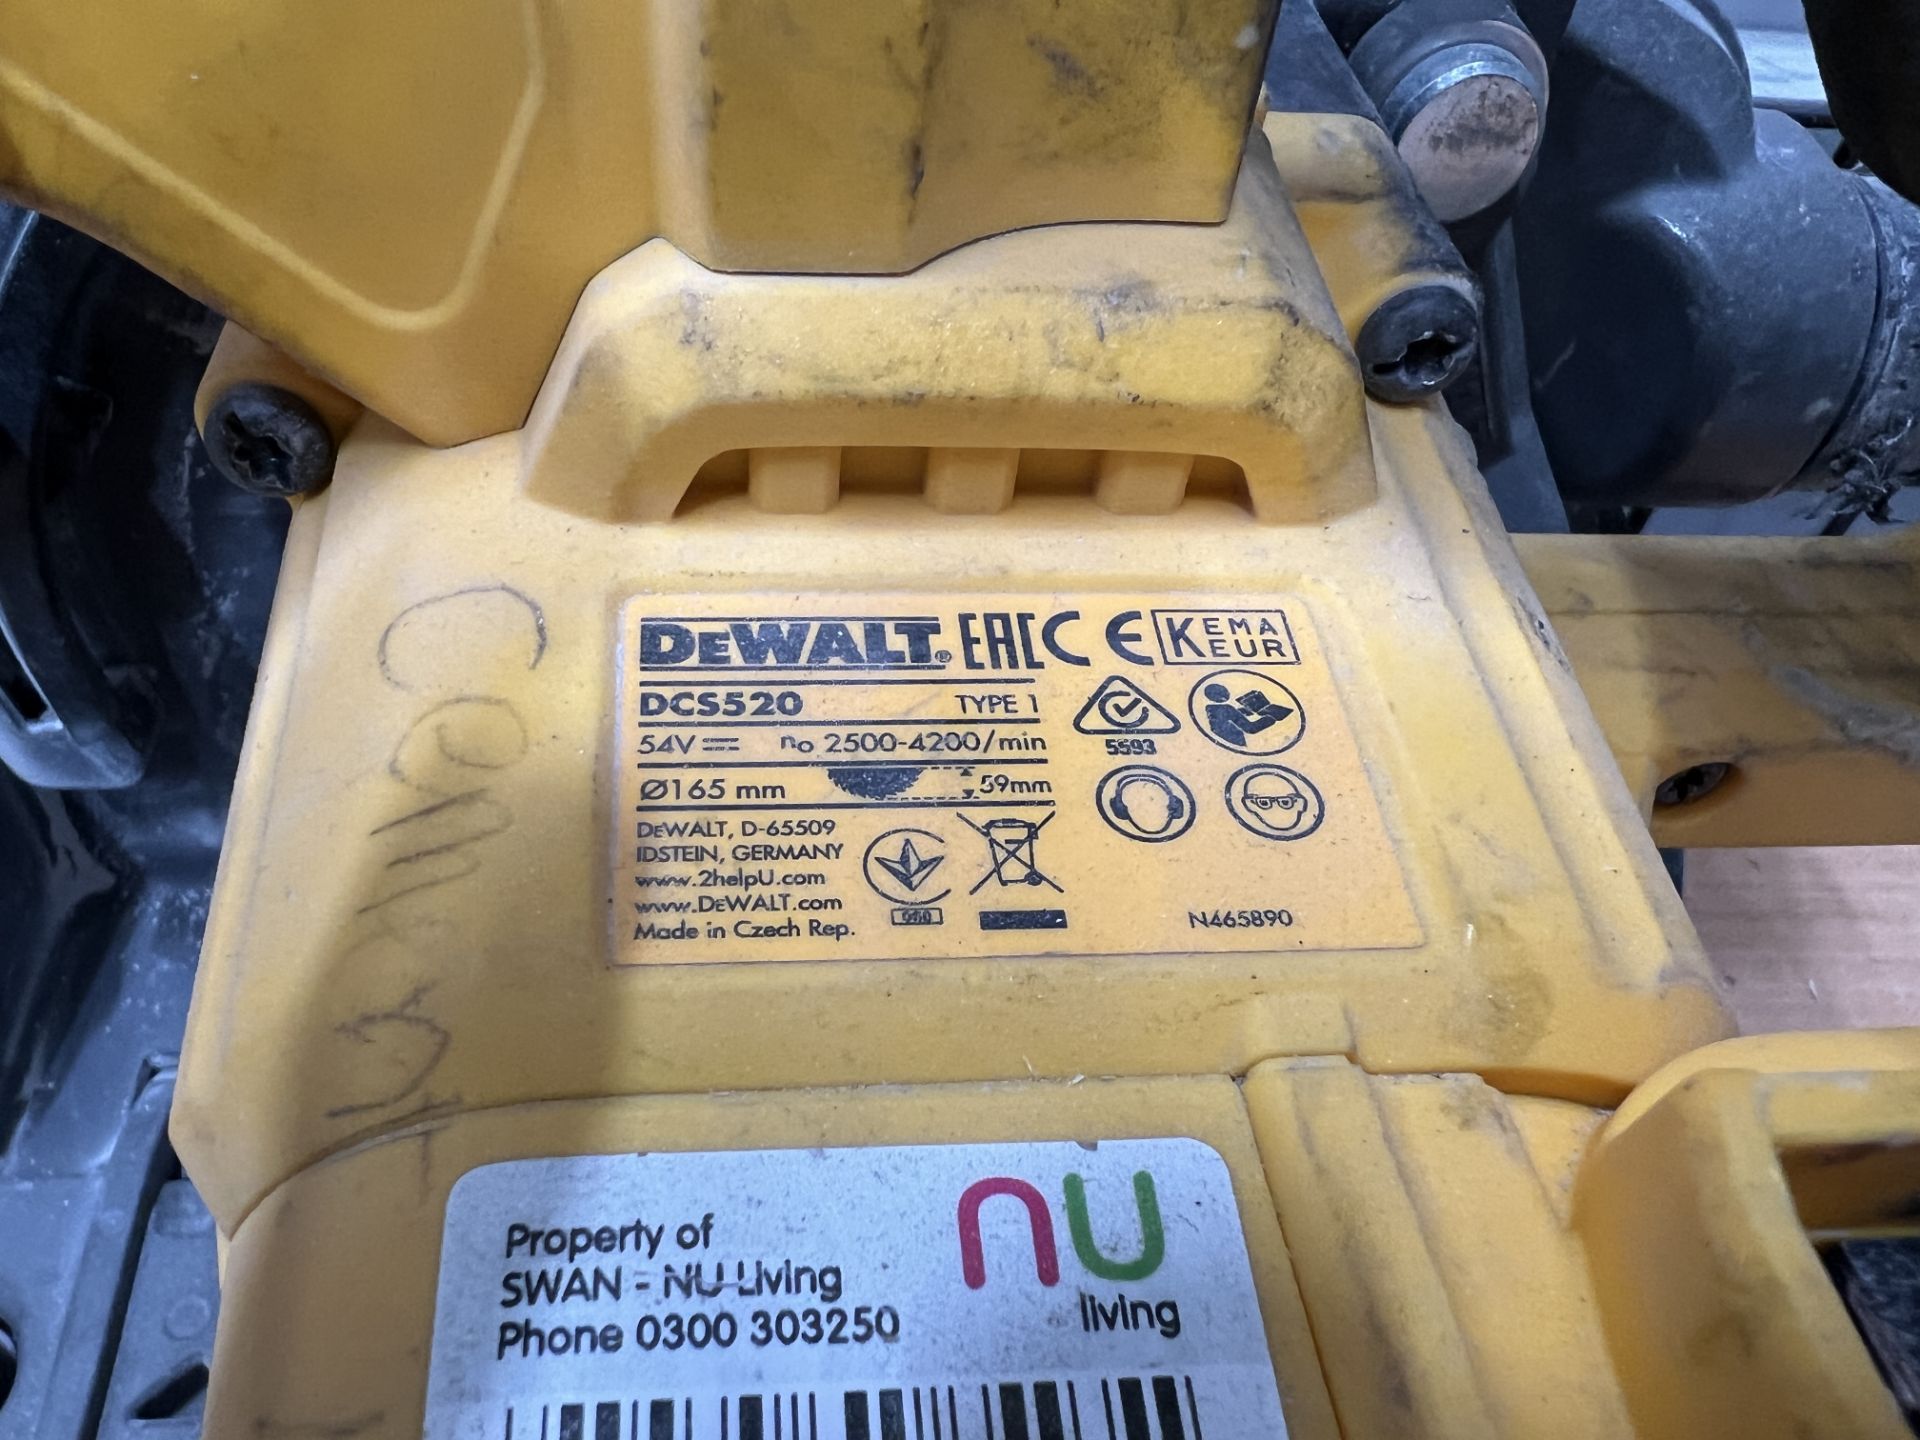 DeWalt, DCS520 battery plunge saw with DCB118 charger and 1x SR Flex volt L1-Ion18v battery - Image 2 of 4